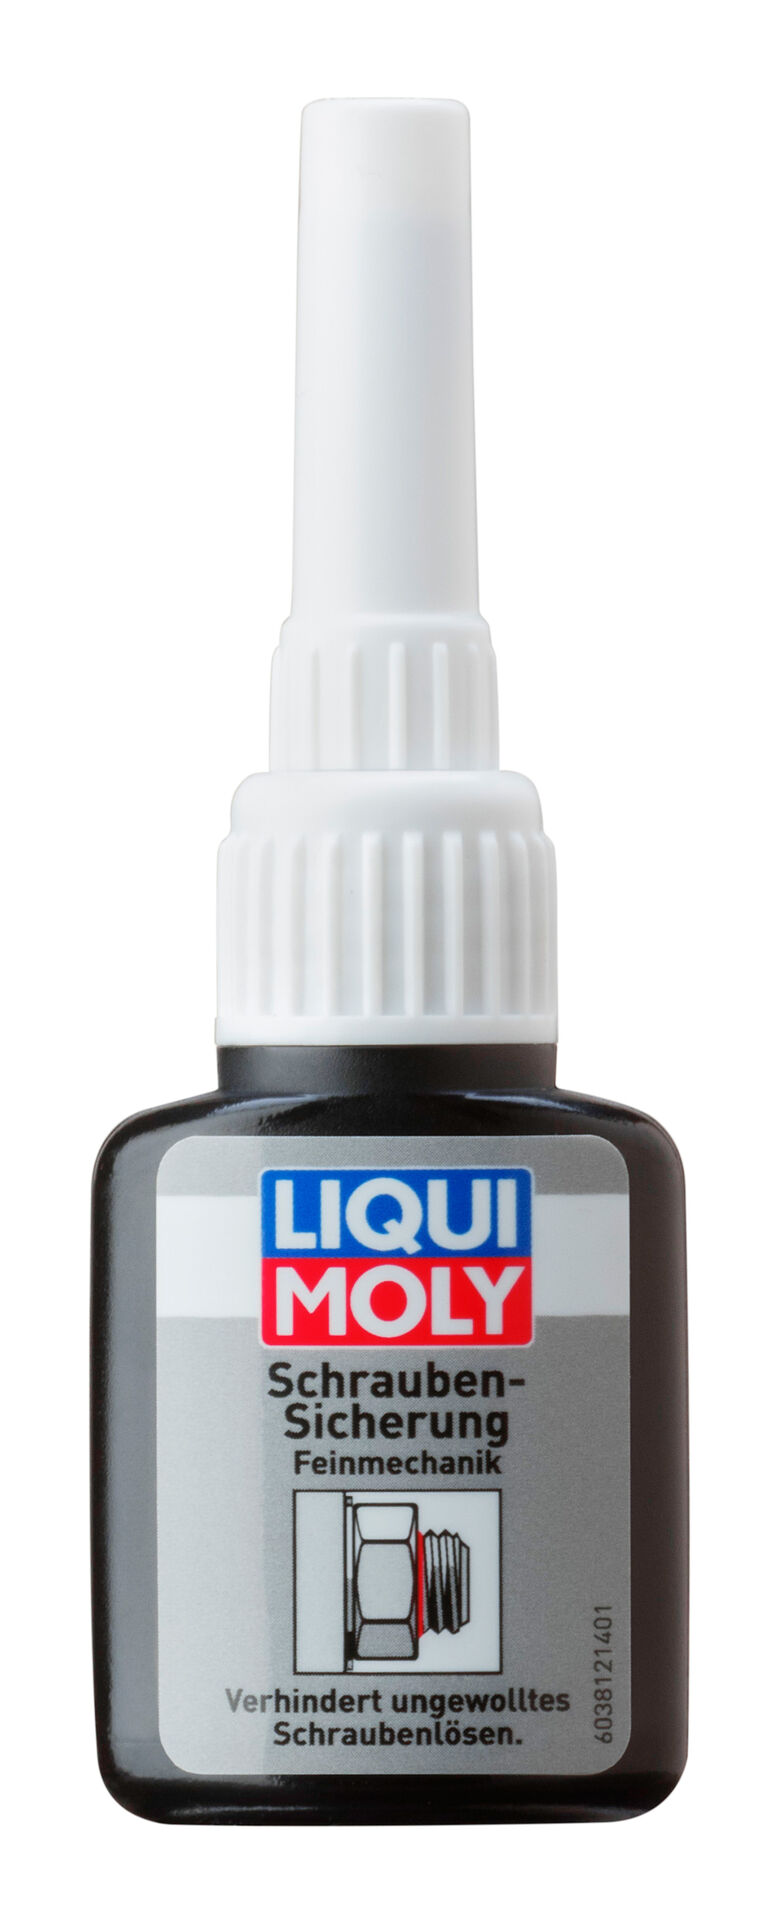 LIQUI-MOLY Schrauben-Sicherung Feinmechanik 10 g 